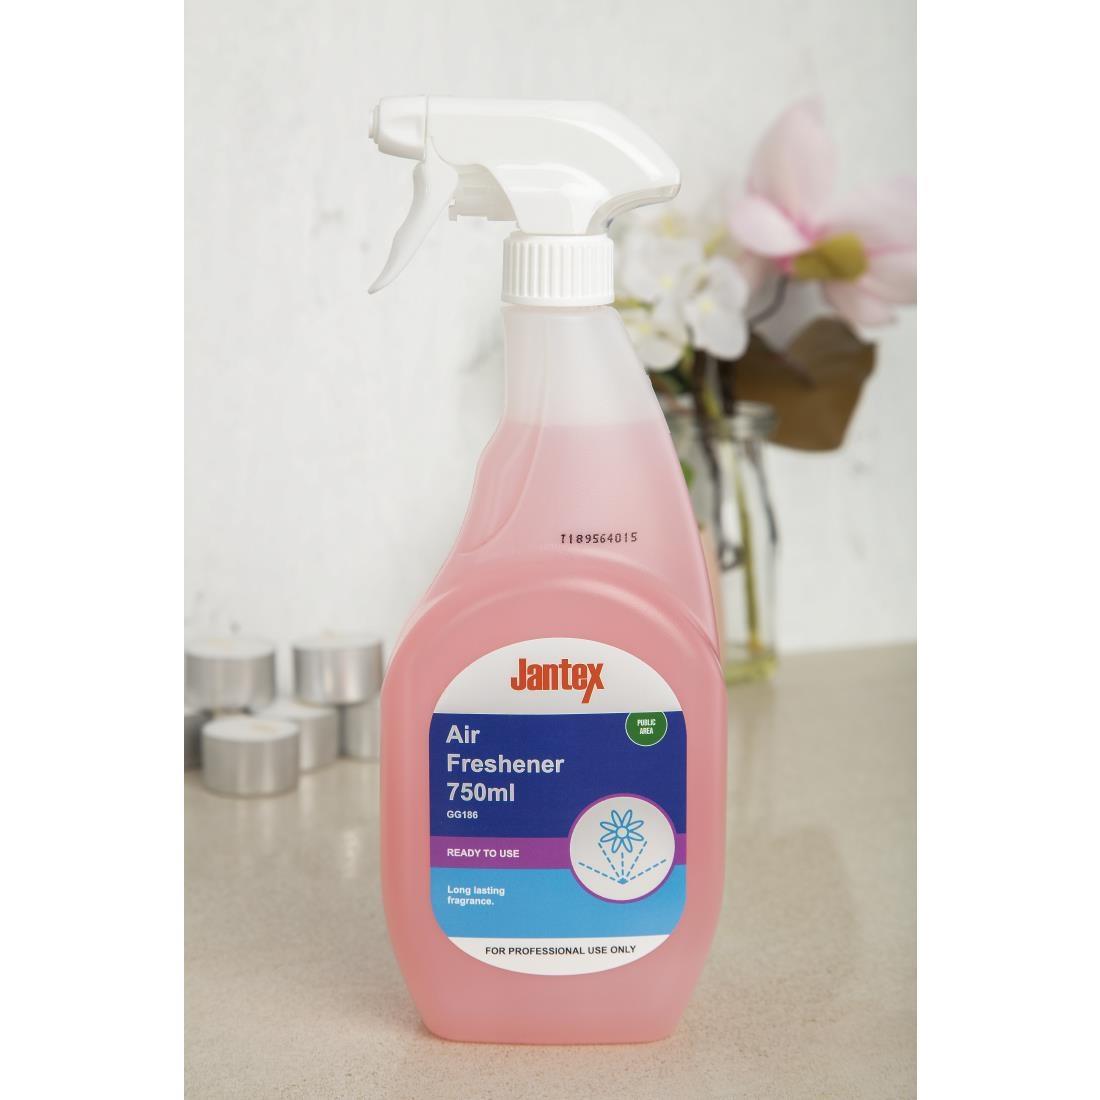 Jantex Air Freshener Spray Ready To Use 750ml - GG186  - 5